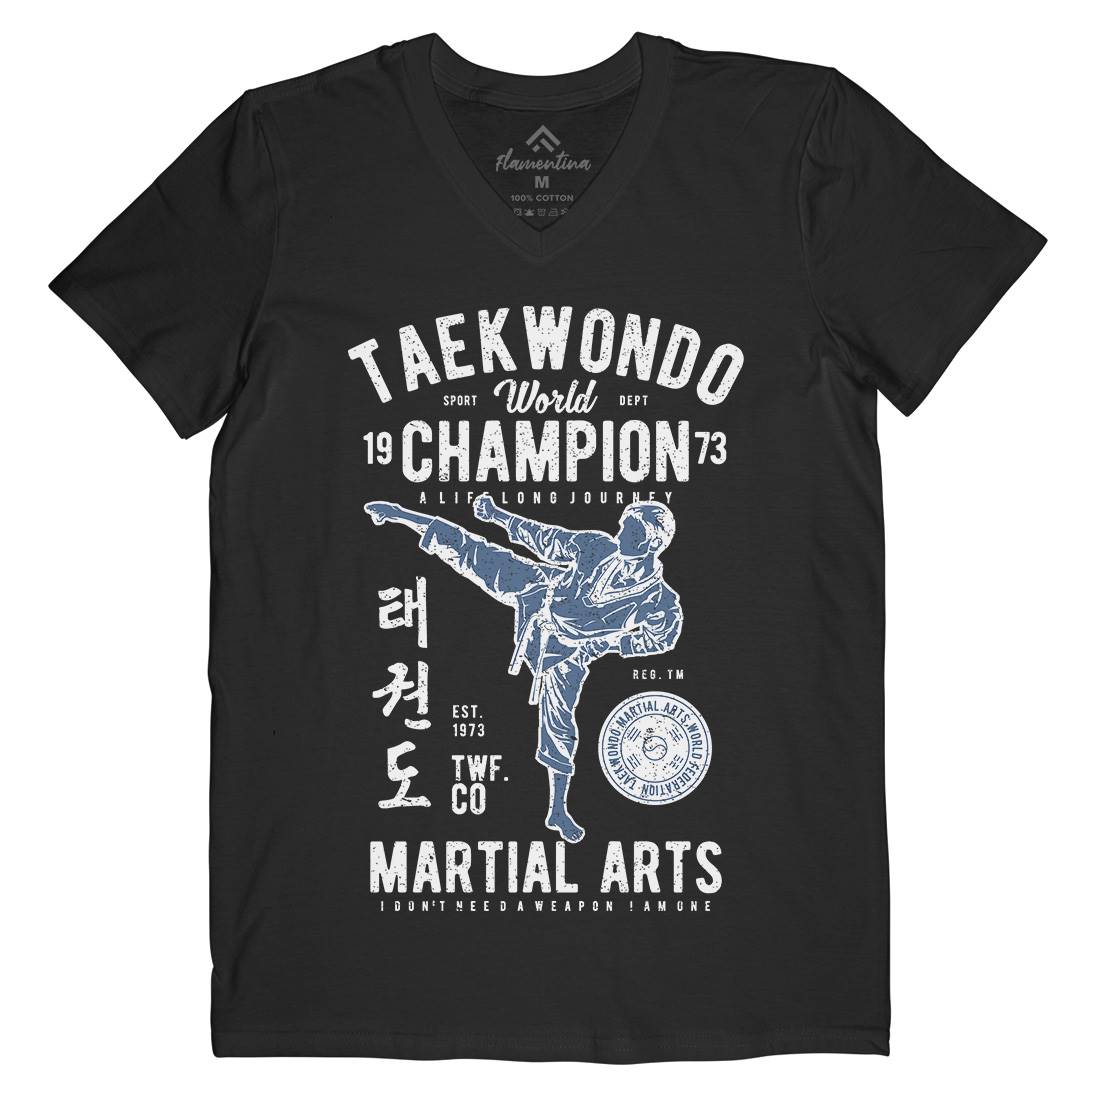 Taekwondo Mens V-Neck T-Shirt Sport A770